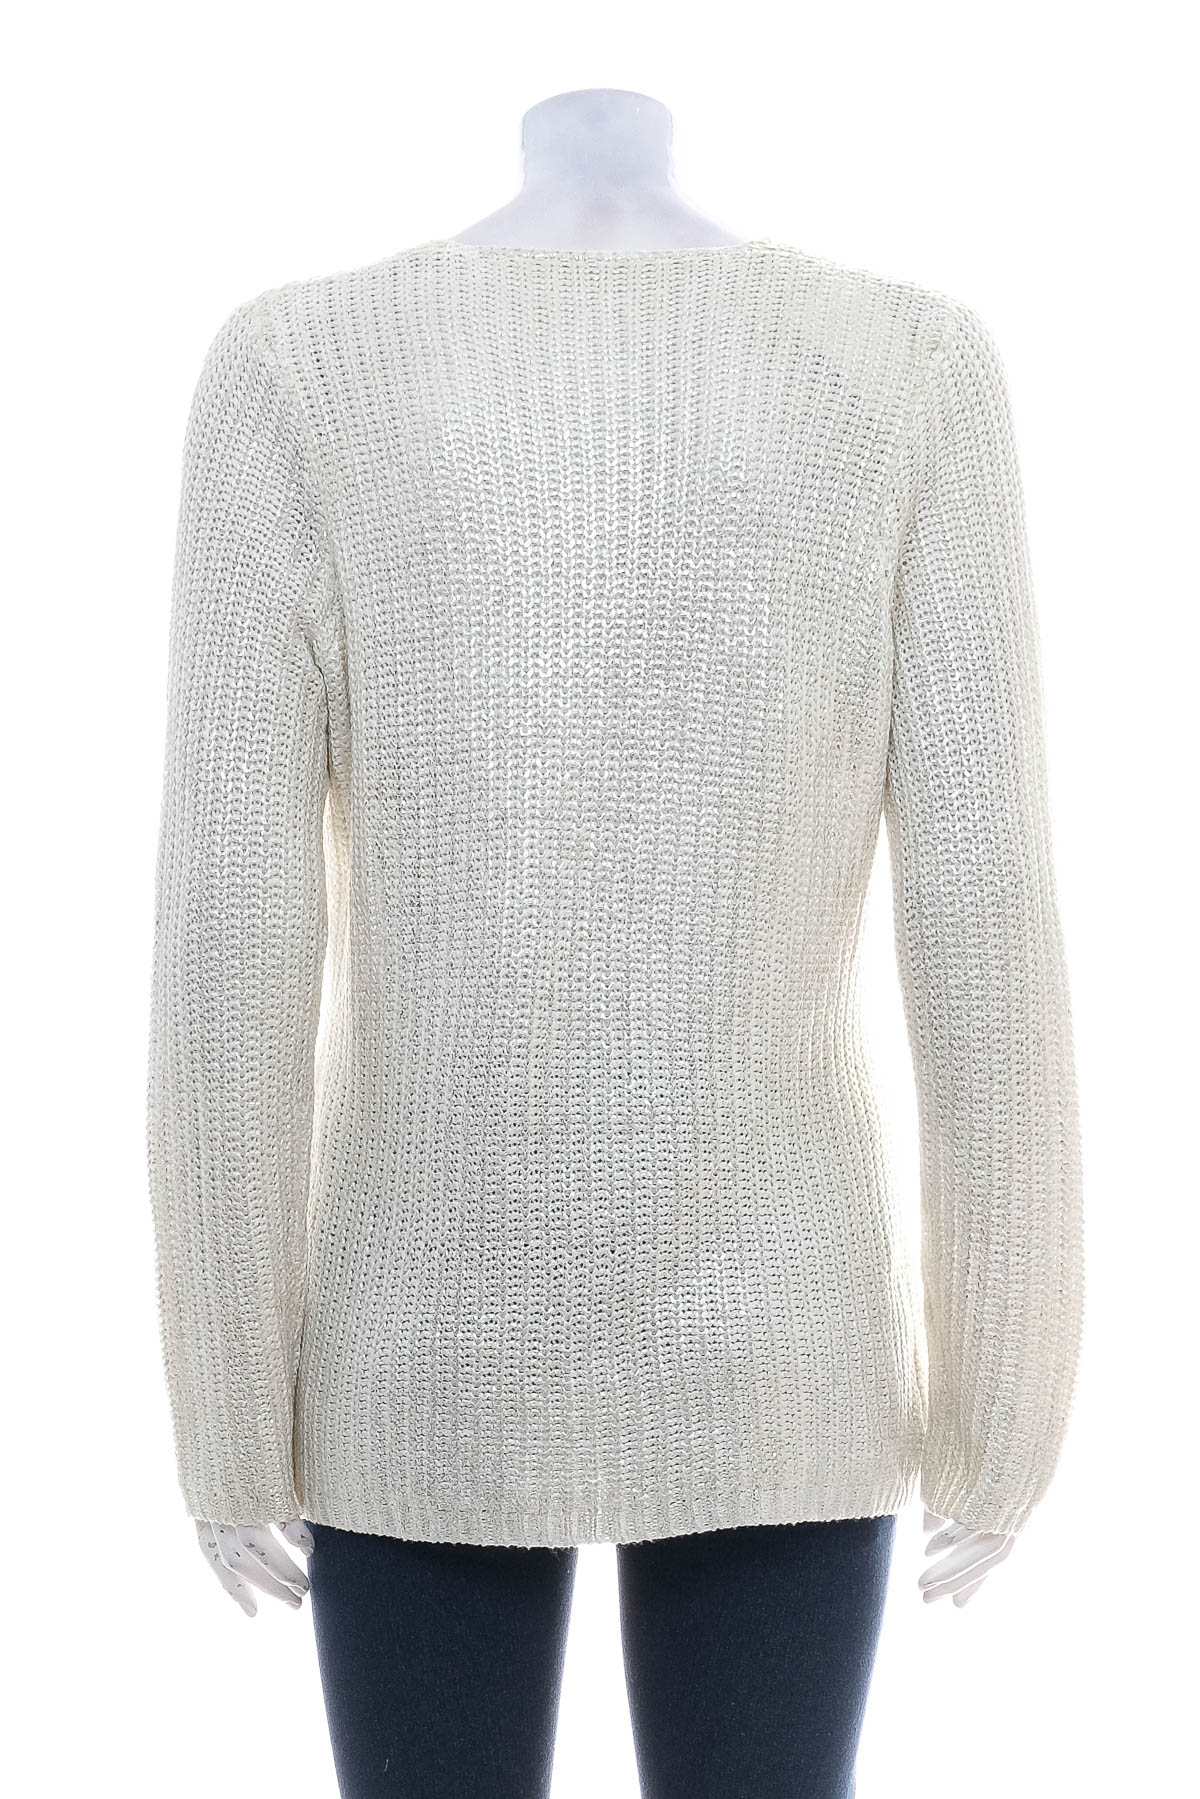 Women's sweater - TONI Dress - 1